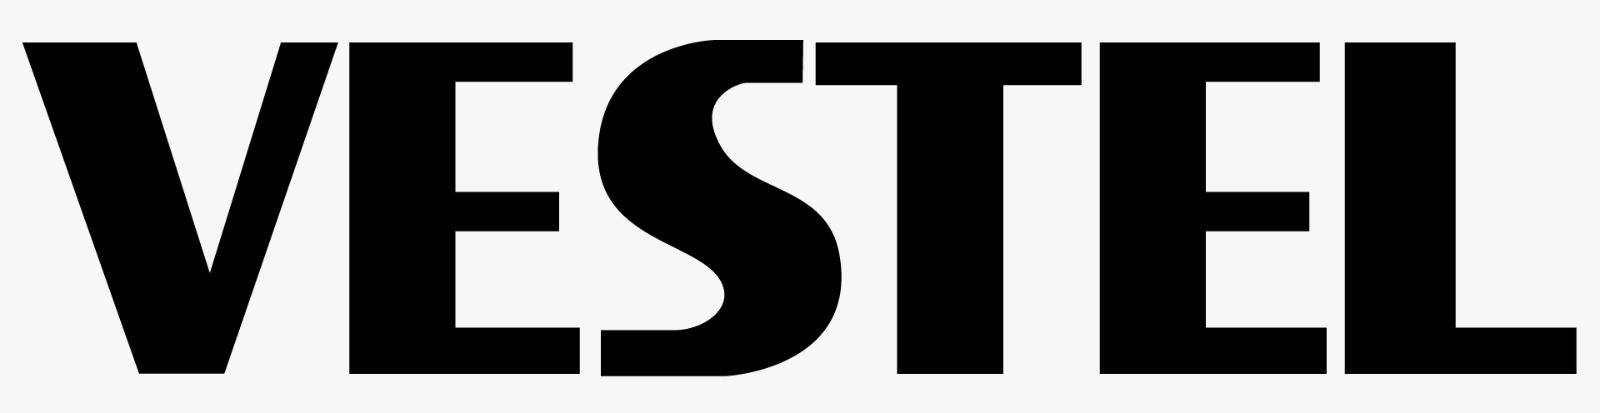 Vestel TV logo